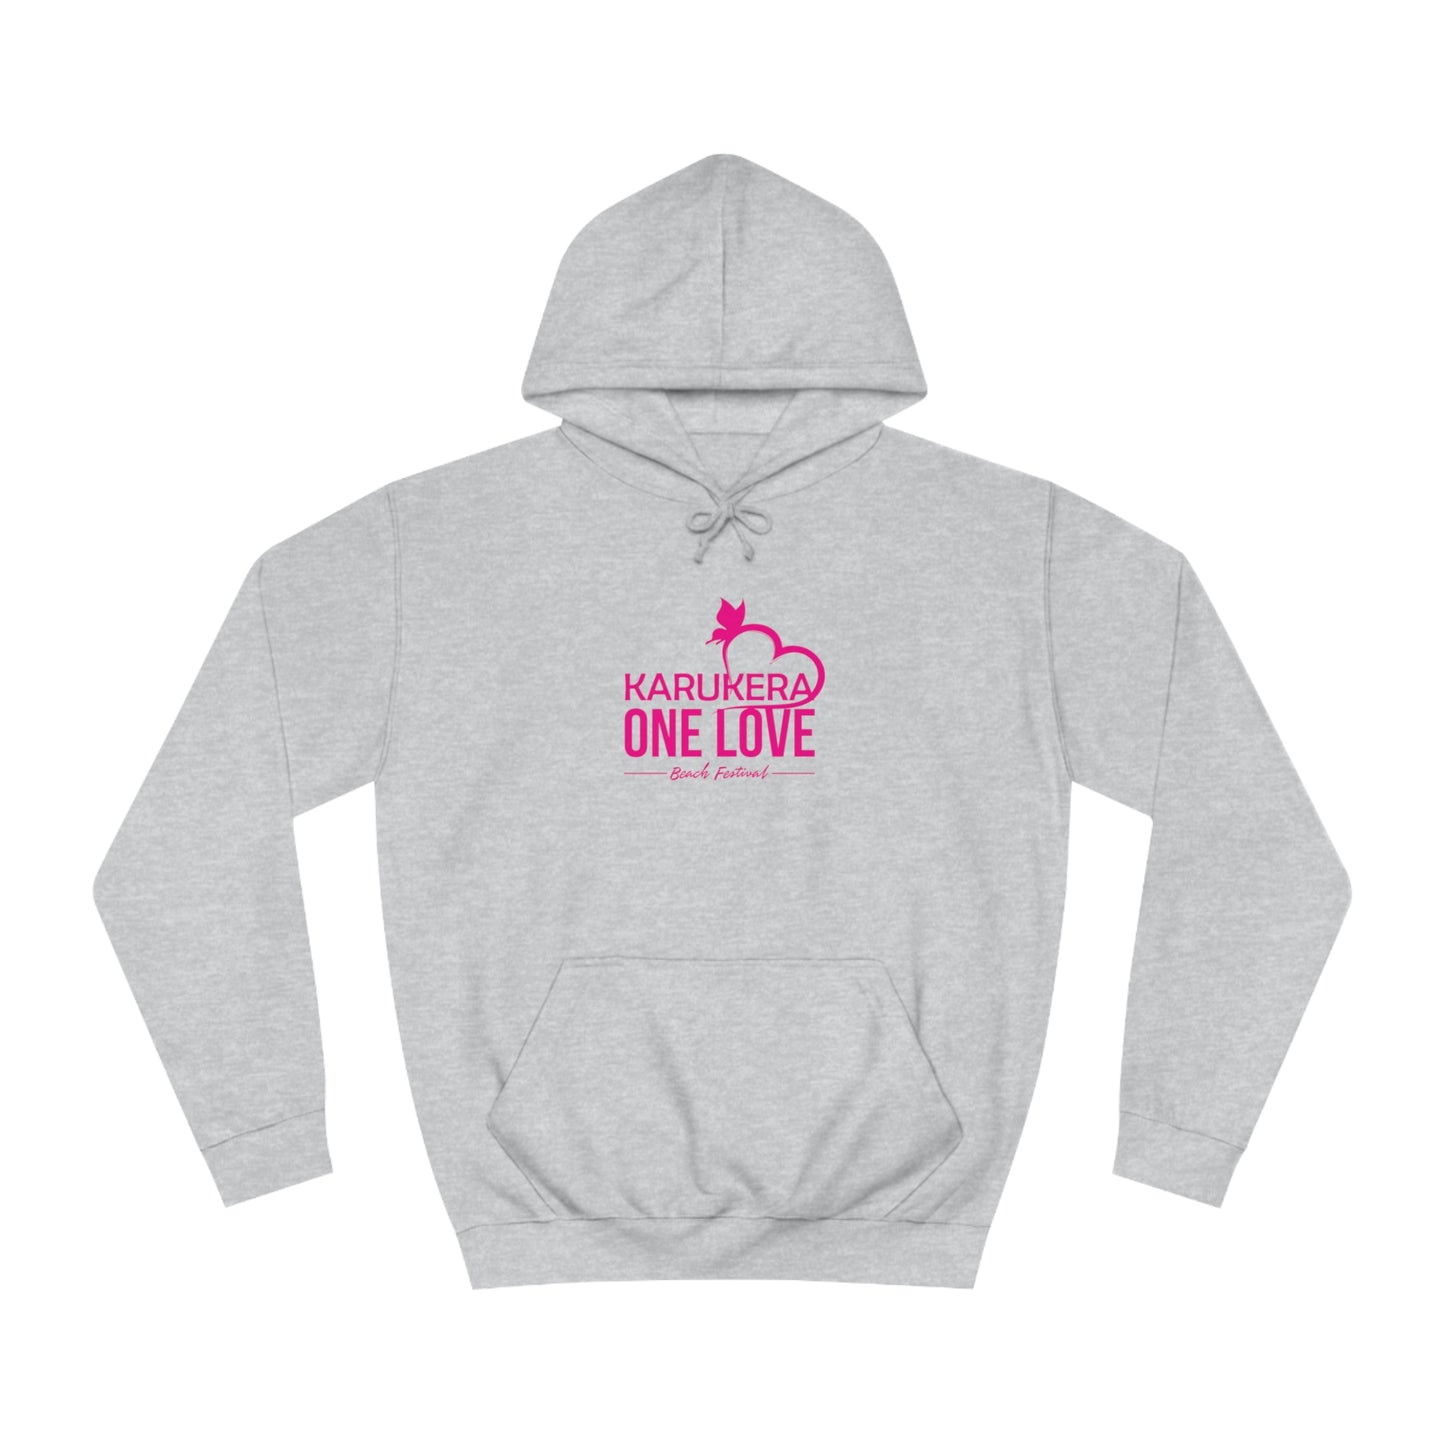 Karukera One Love College Hoodie (pink)